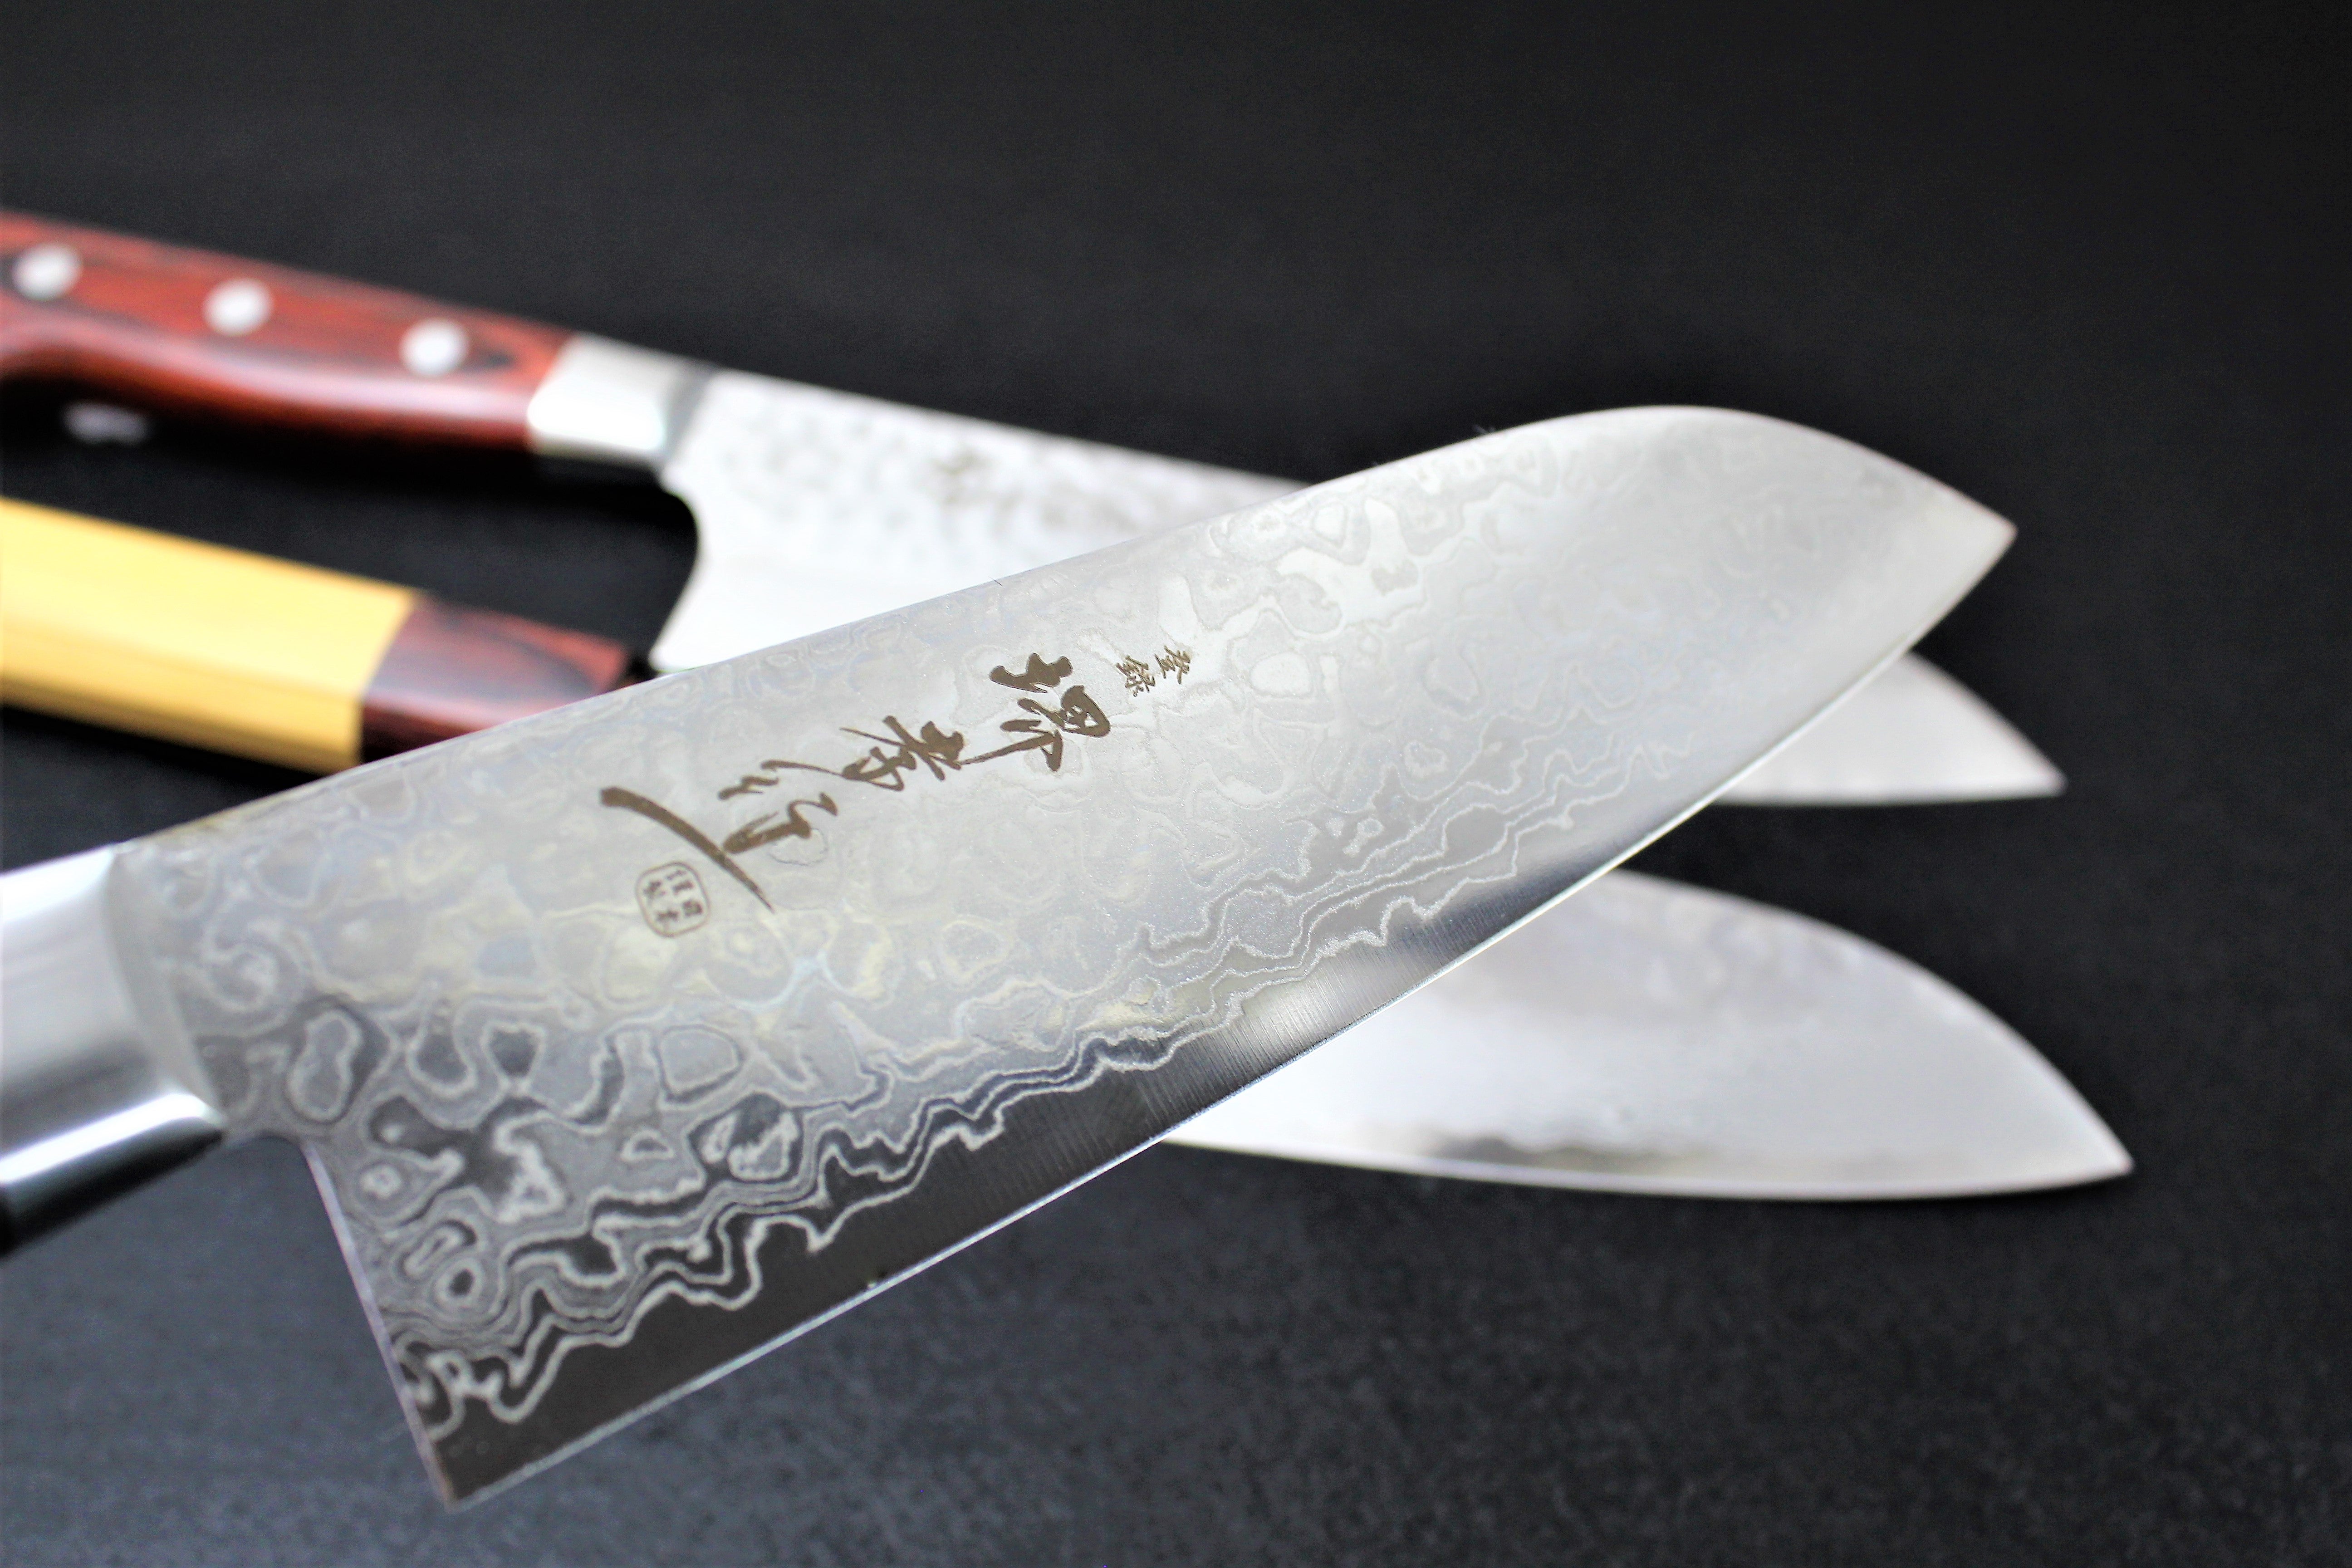 Japanese Santoku/Multi-purpose Knife with Walnut Handle